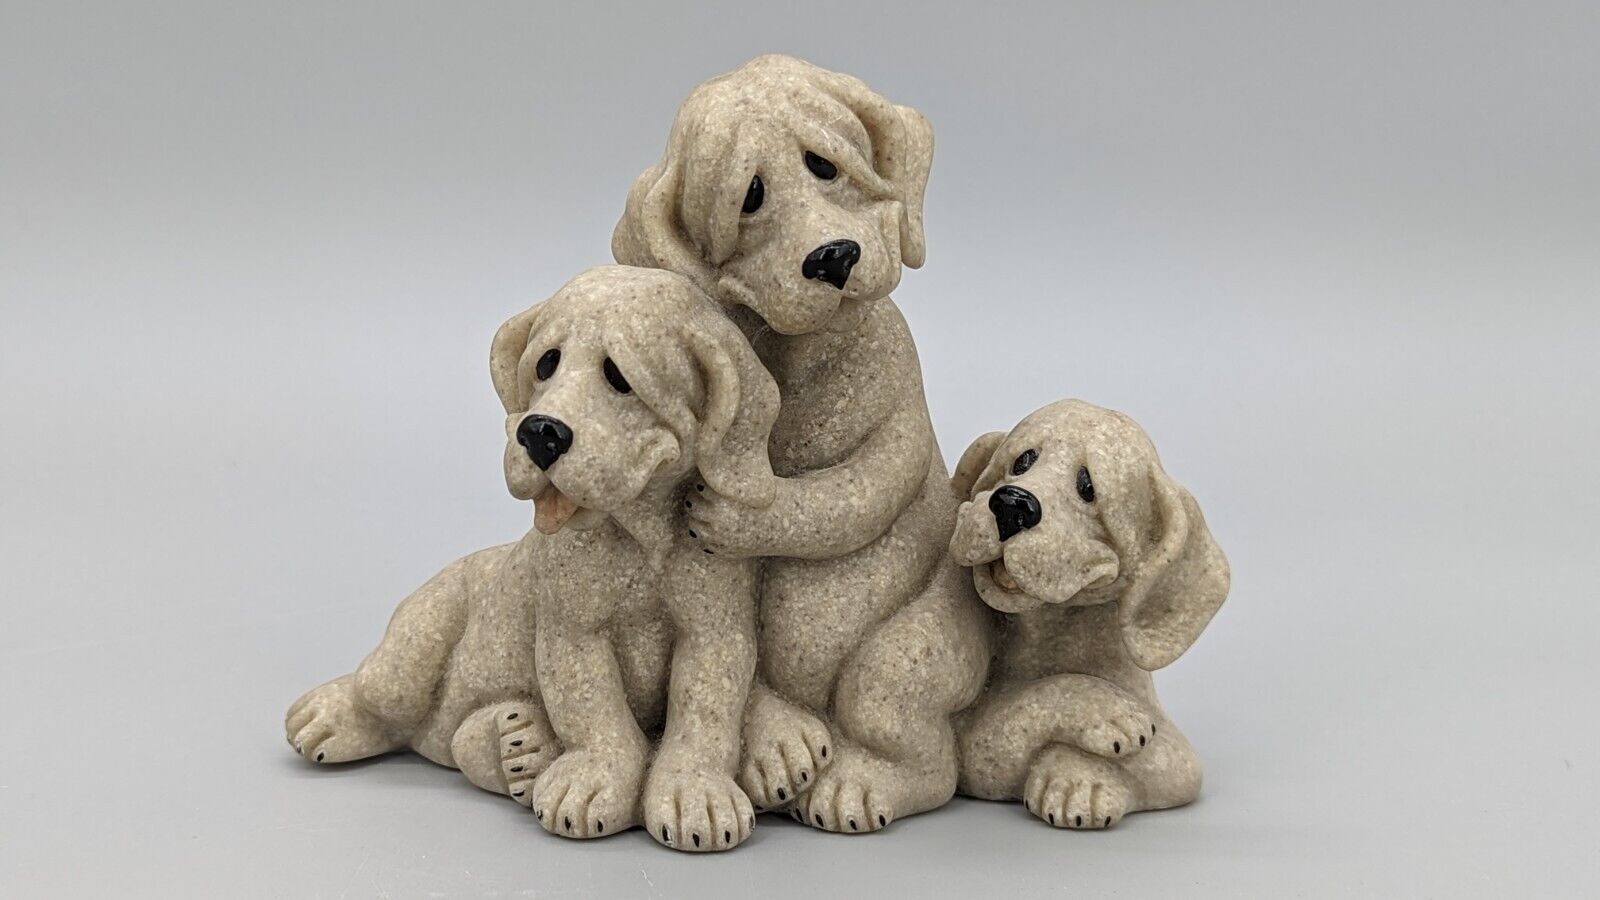 Quarry Critters 2001 Second Nature Design Petie Pepe Pooch Figurine Statue Dogs